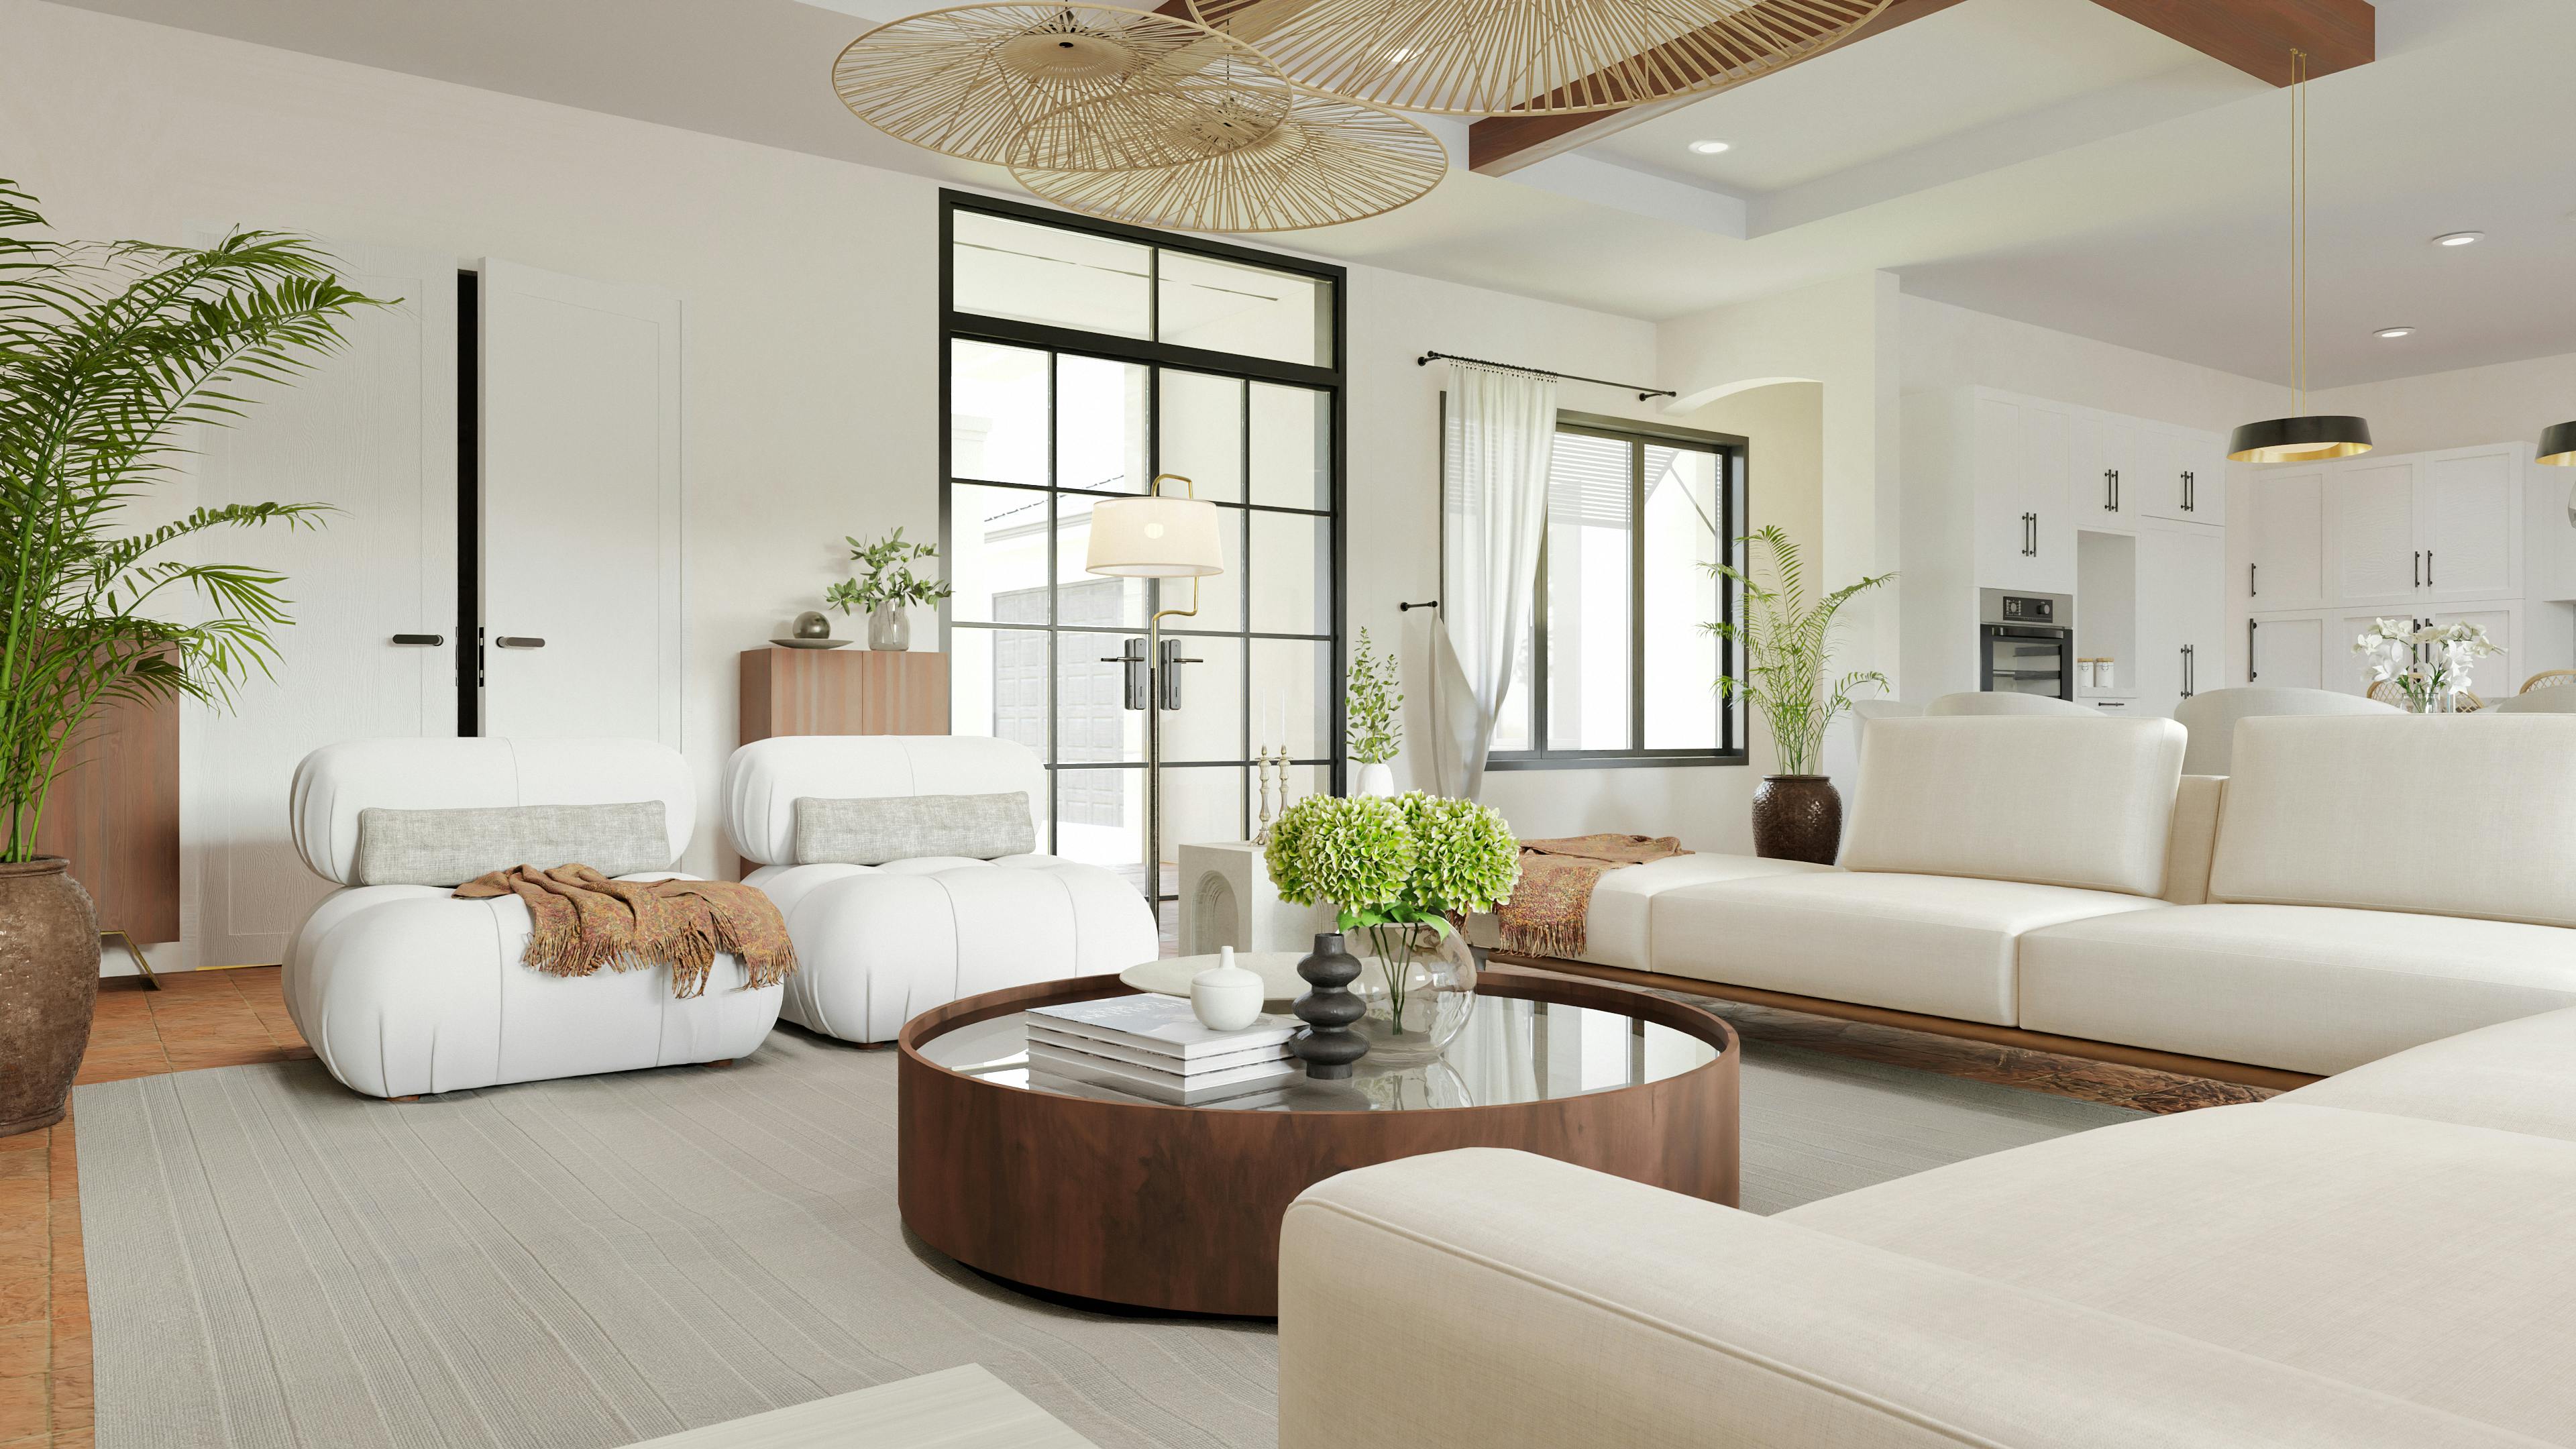 3D Render of a Mediterranean-style living room by HomeRender